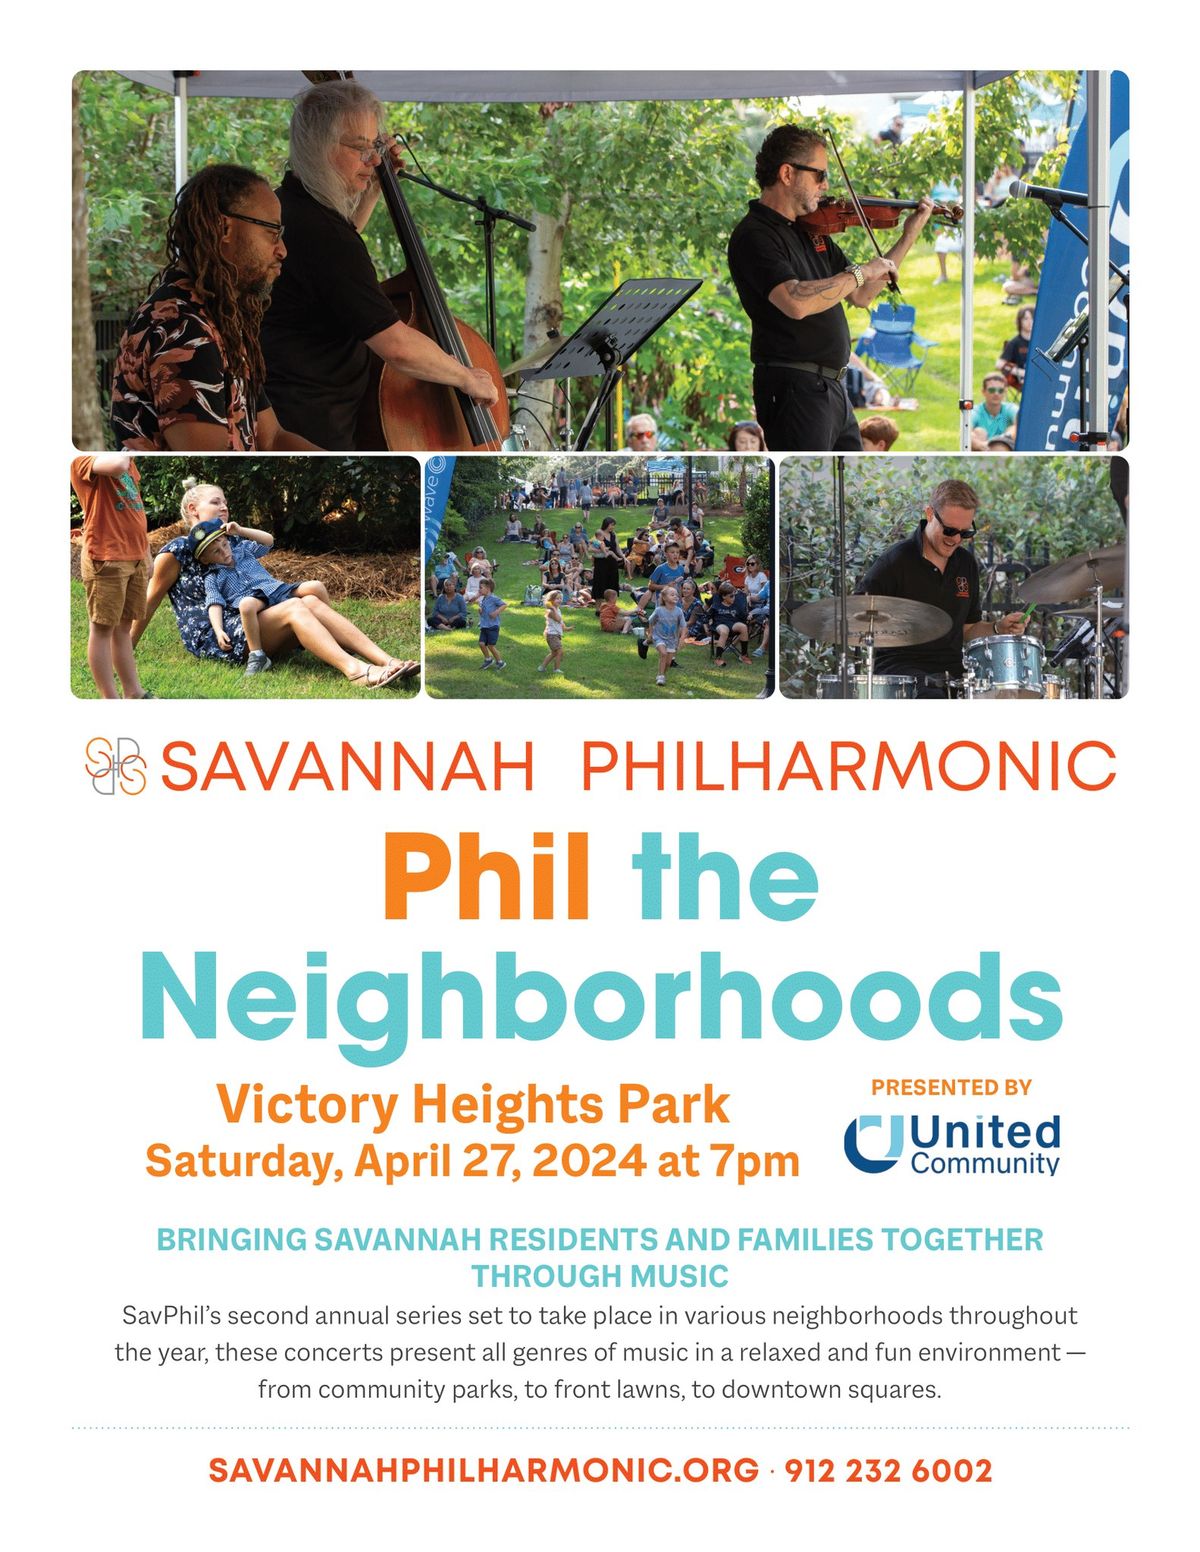 Phil the Neighborhoods: Victory Heights Park